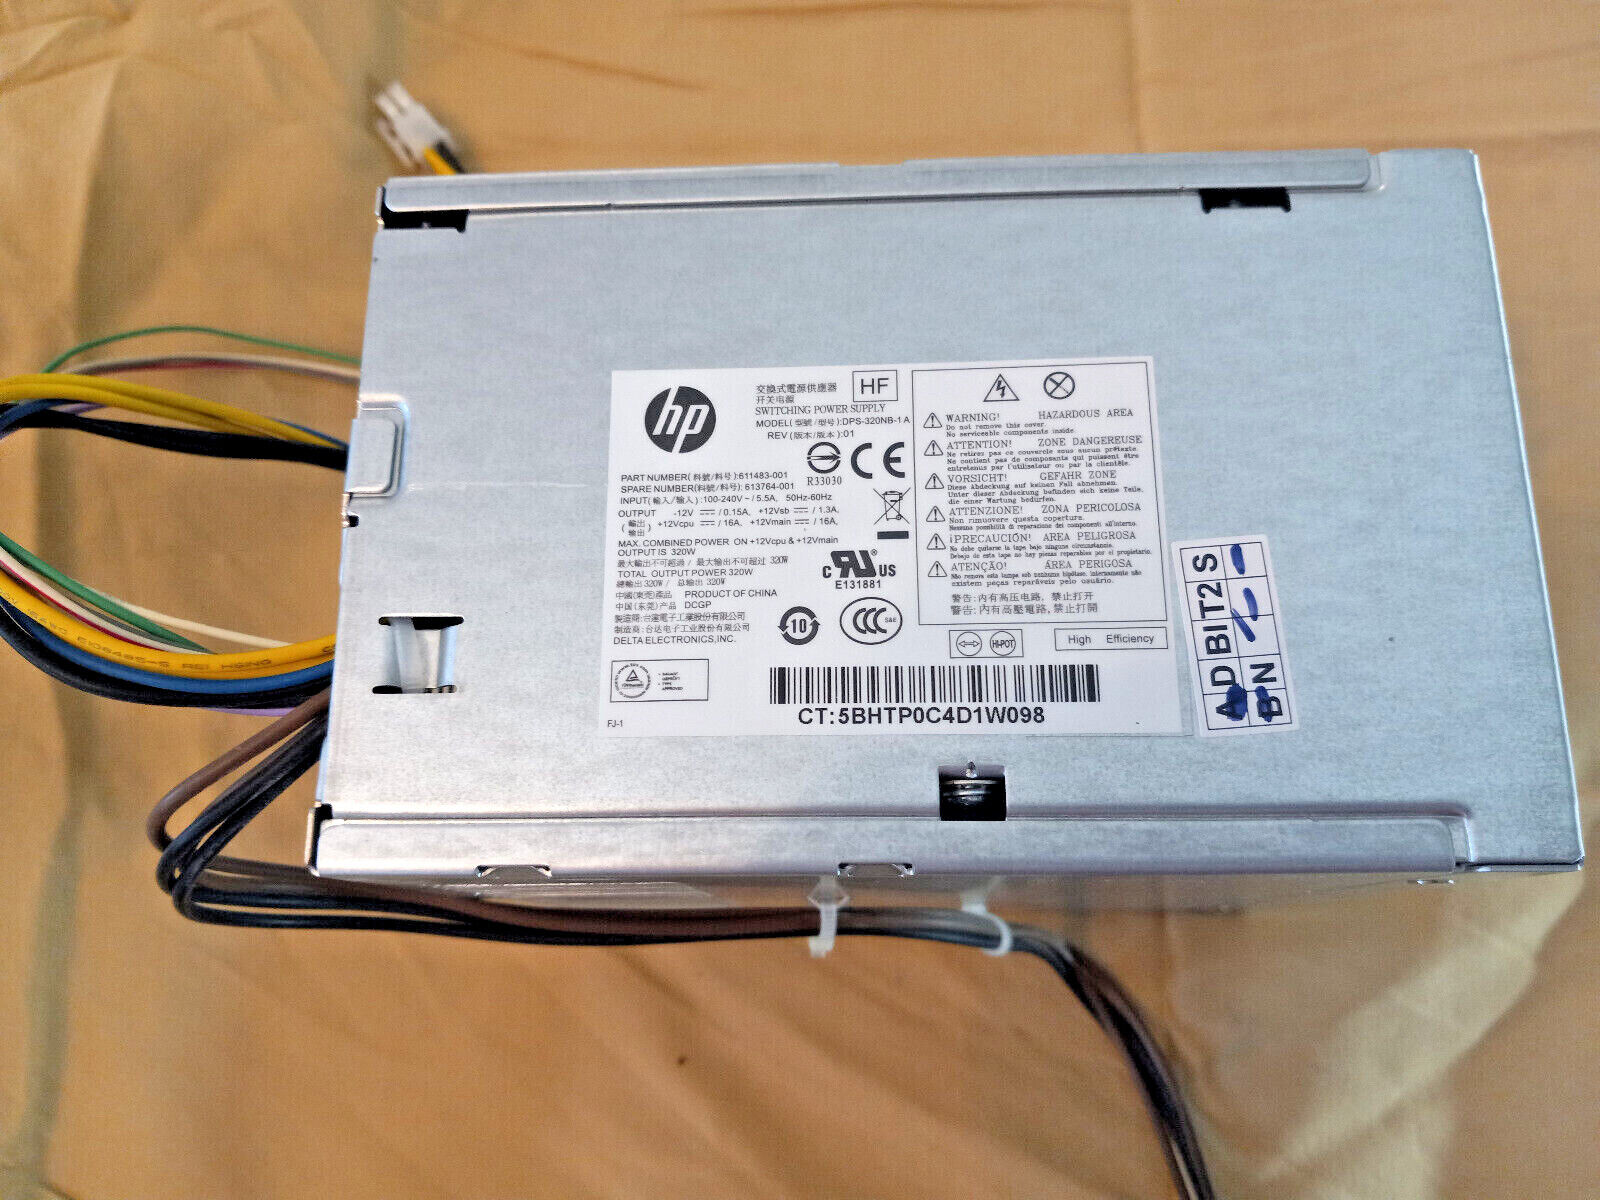 HP DPS-320NB-1A 611483-001 Power Supply Input 100-240V Output 320W MAX  L-K